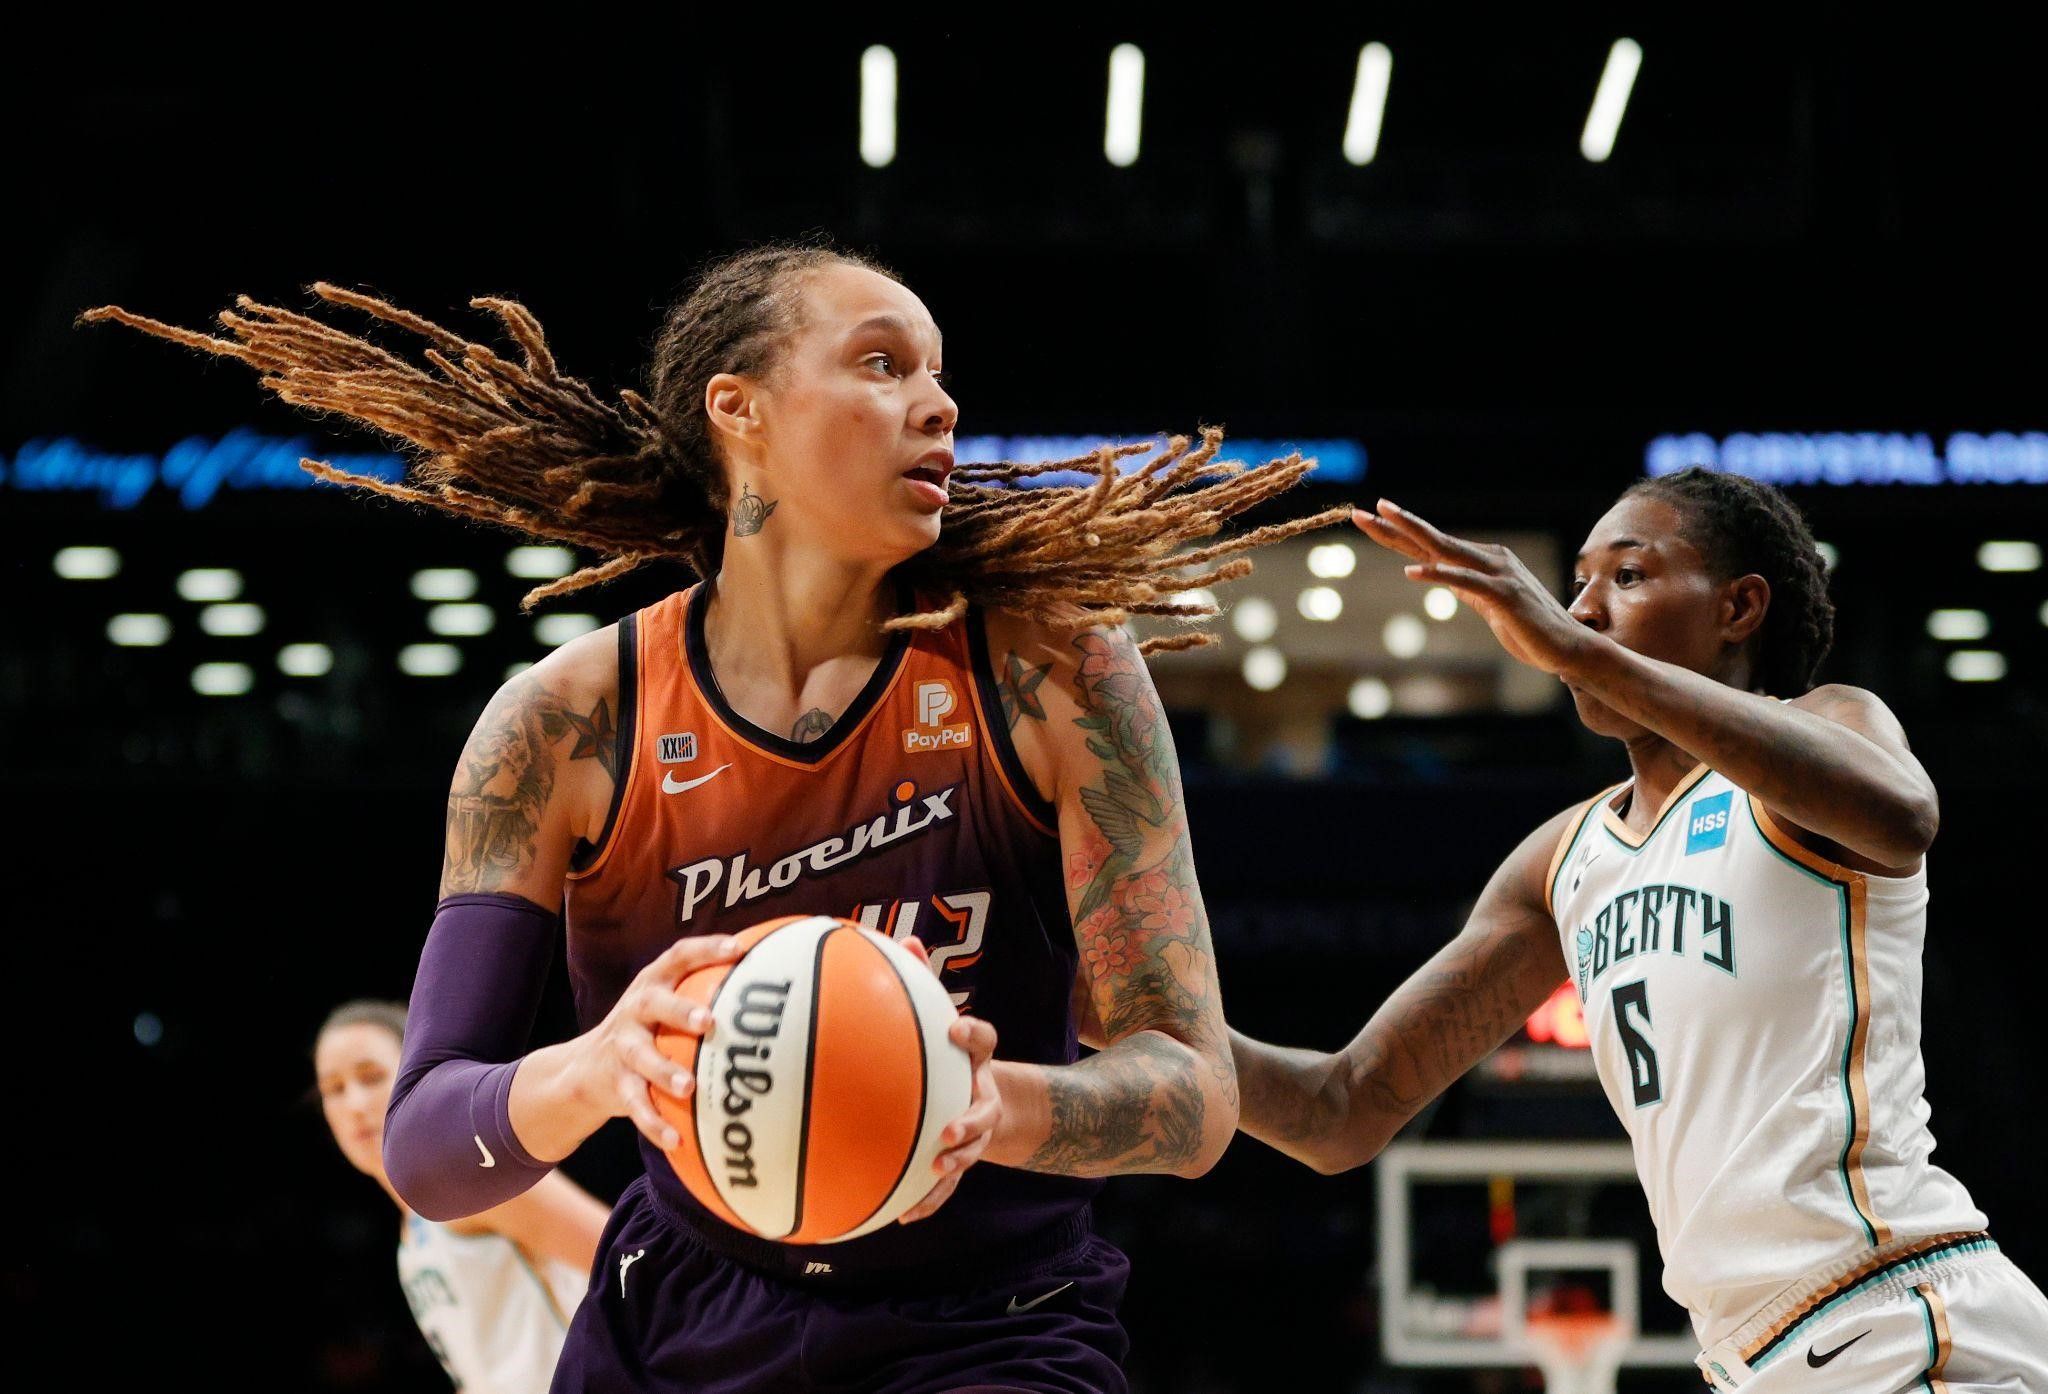 WNBA: Turner's free throw locks second-round spot for the Mercury